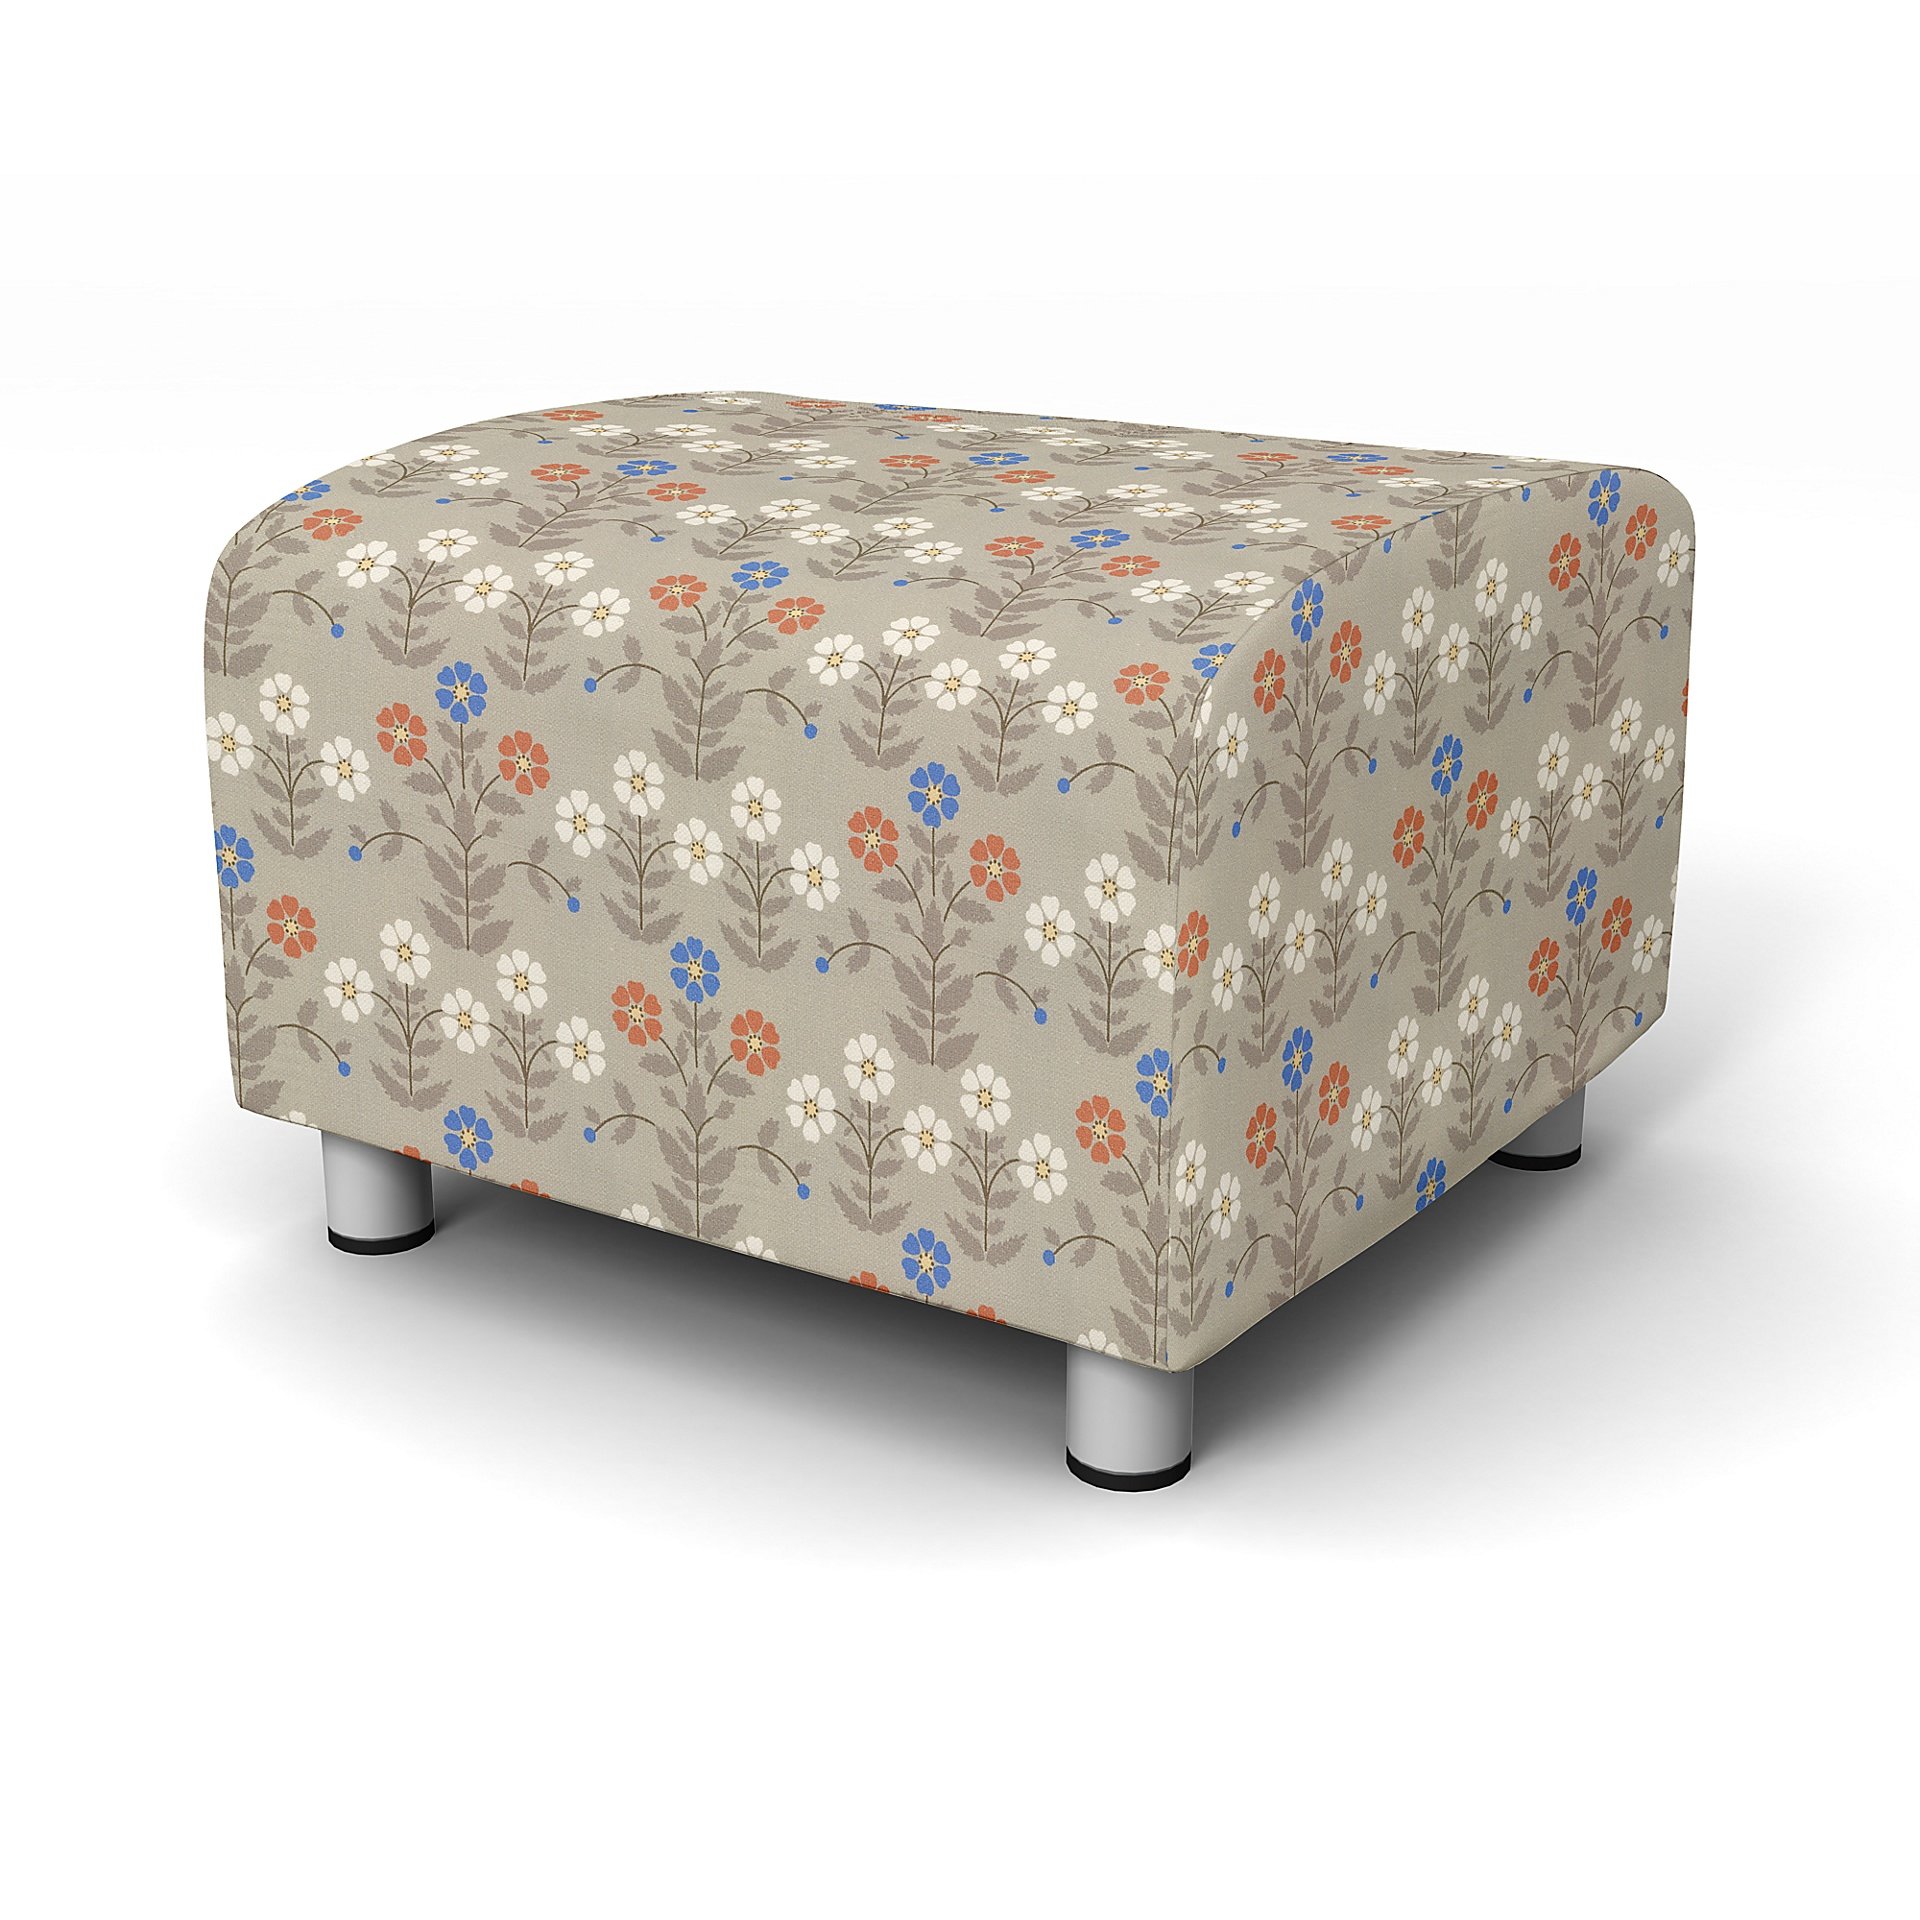 IKEA - Klippan Footstool Cover, Sippor Blue/Orange, BEMZ x BORASTAPETER COLLECTION - Bemz